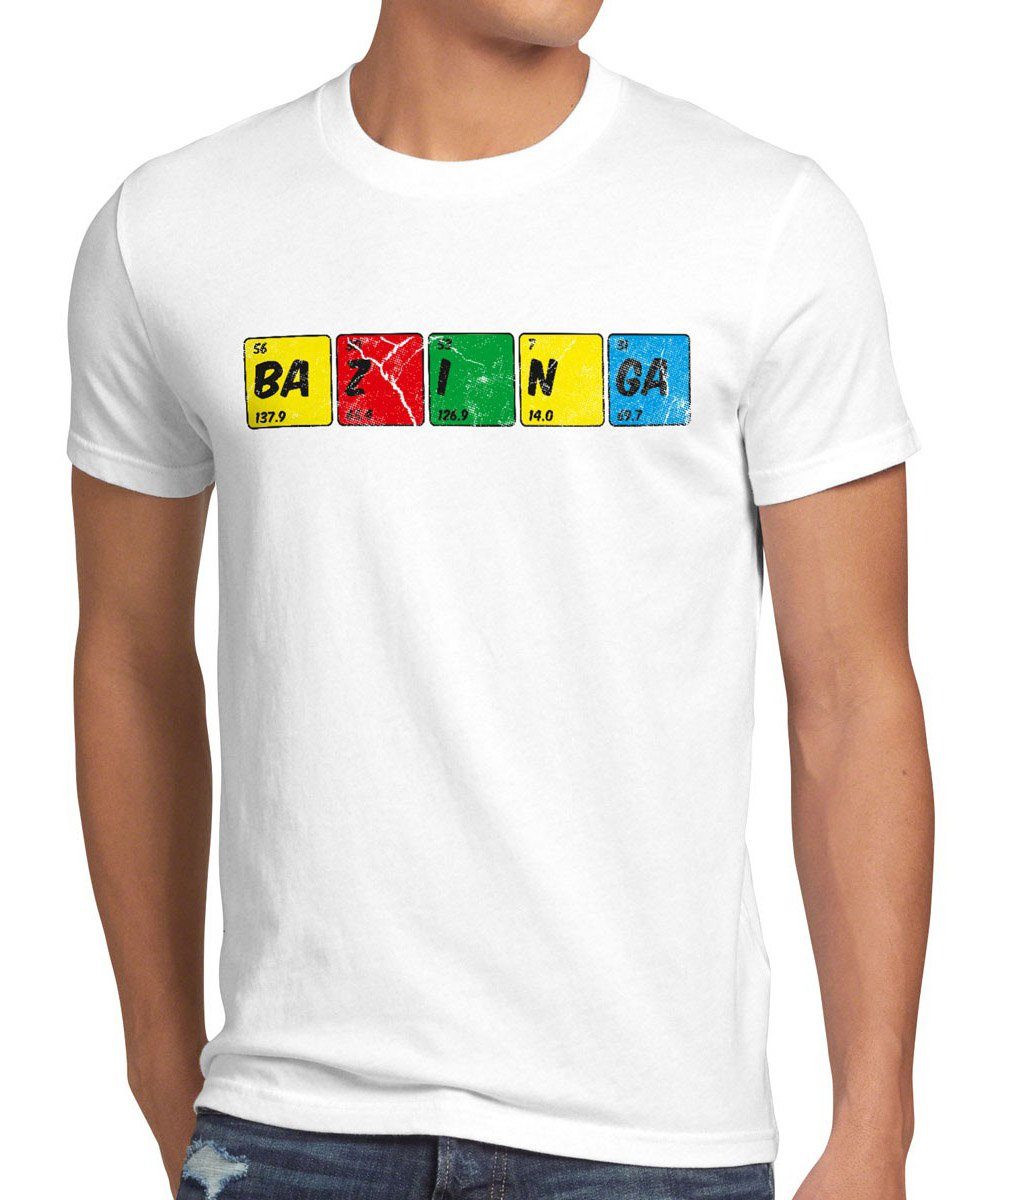 [Auf Bestellung gefertigte Produkte] style3 Print-Shirt Herren theory big bazinga Periodensystem weiß cooper T-Shirt tbbt bang chemie Sheldon